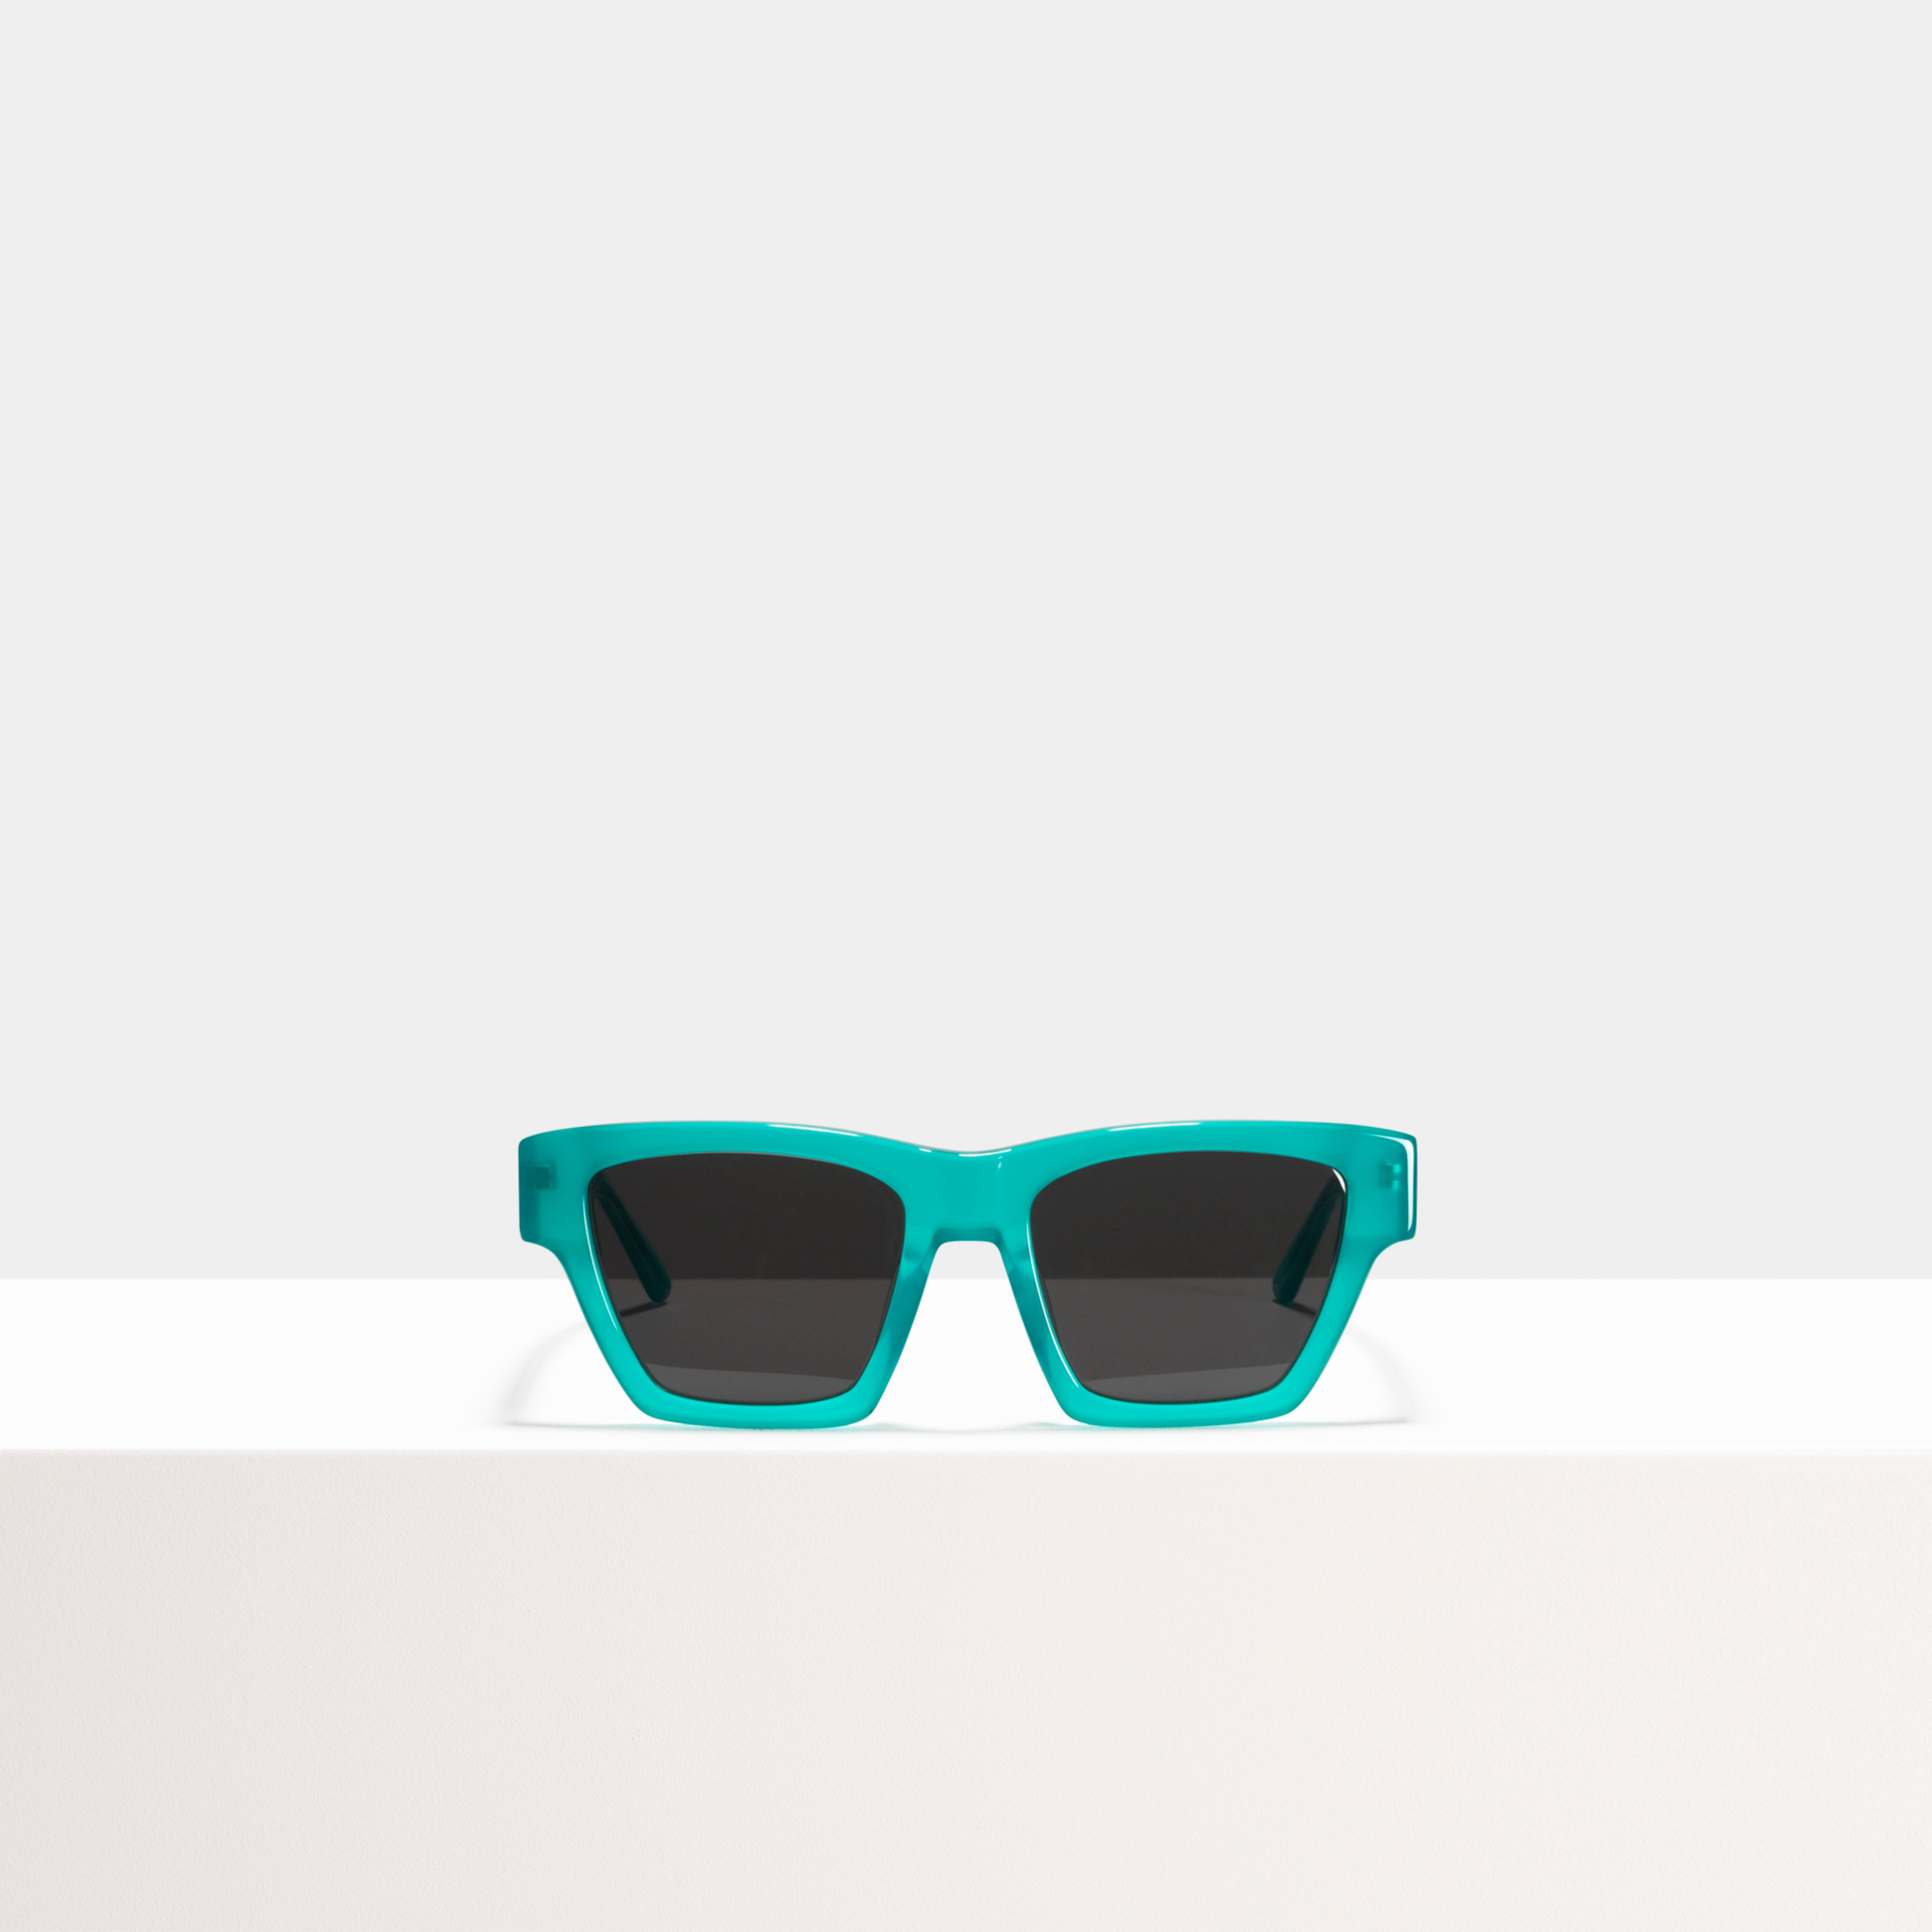 Ace & Tate Sonnenbrillen | Quadratisch Acetat in Blau, Grün